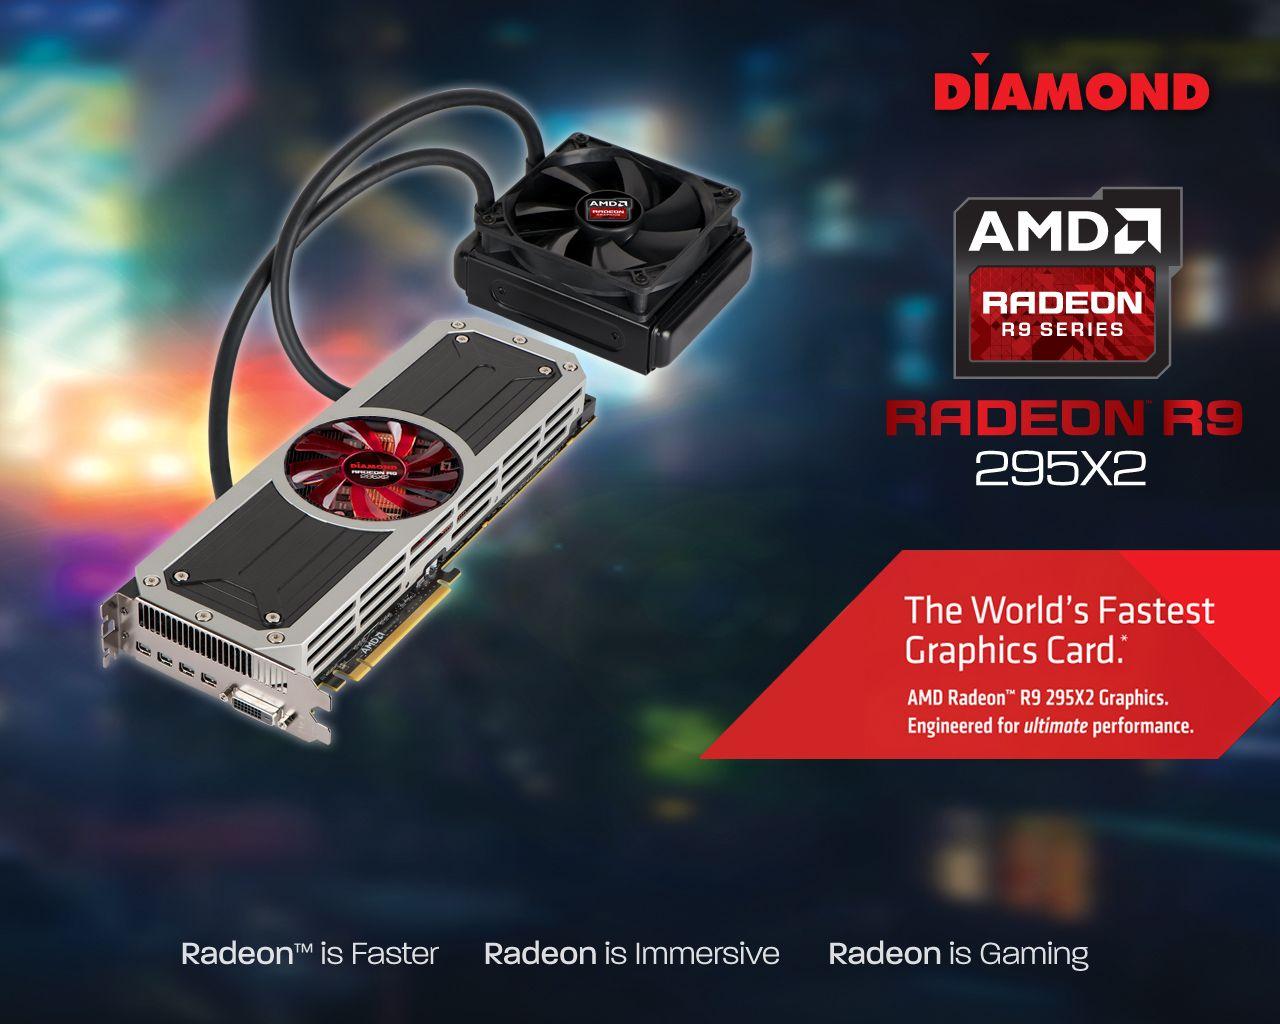 Diamond Multimedia Game On, Game Video Cards, ATI Radeon Graphic